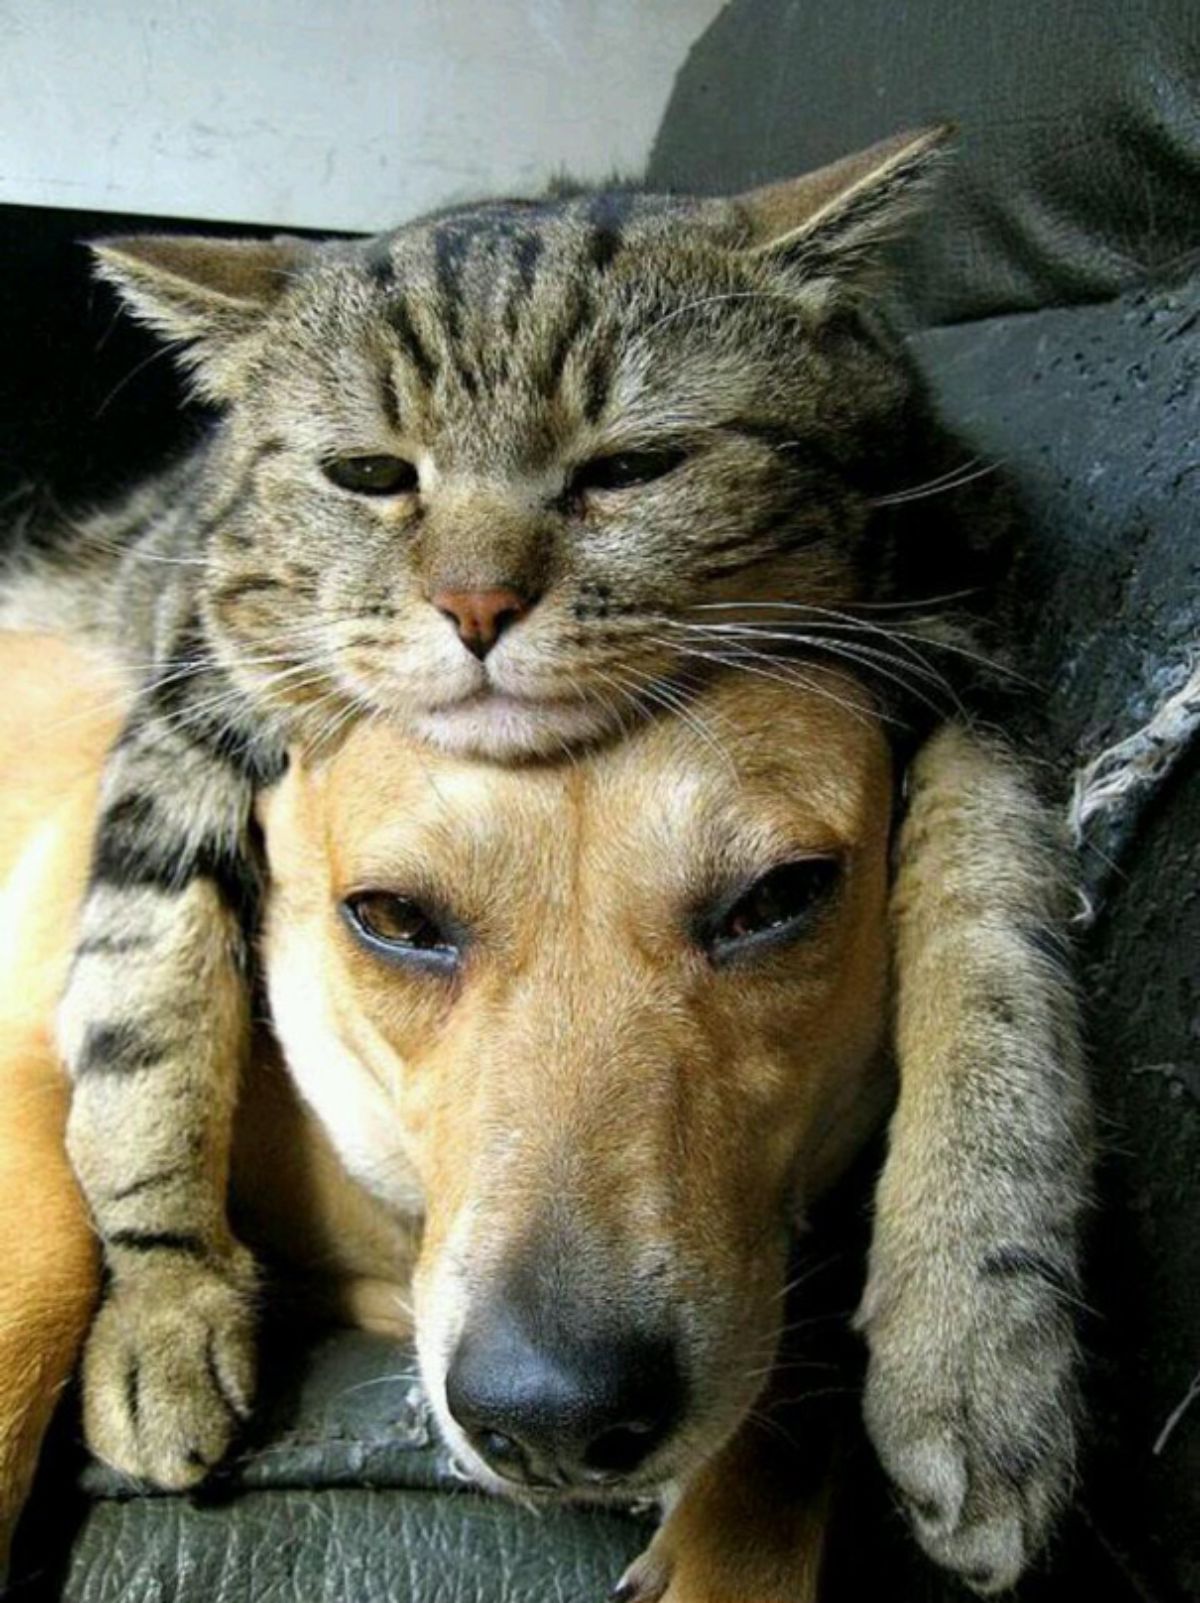 grey tabby cat sleeping on brown dog's head